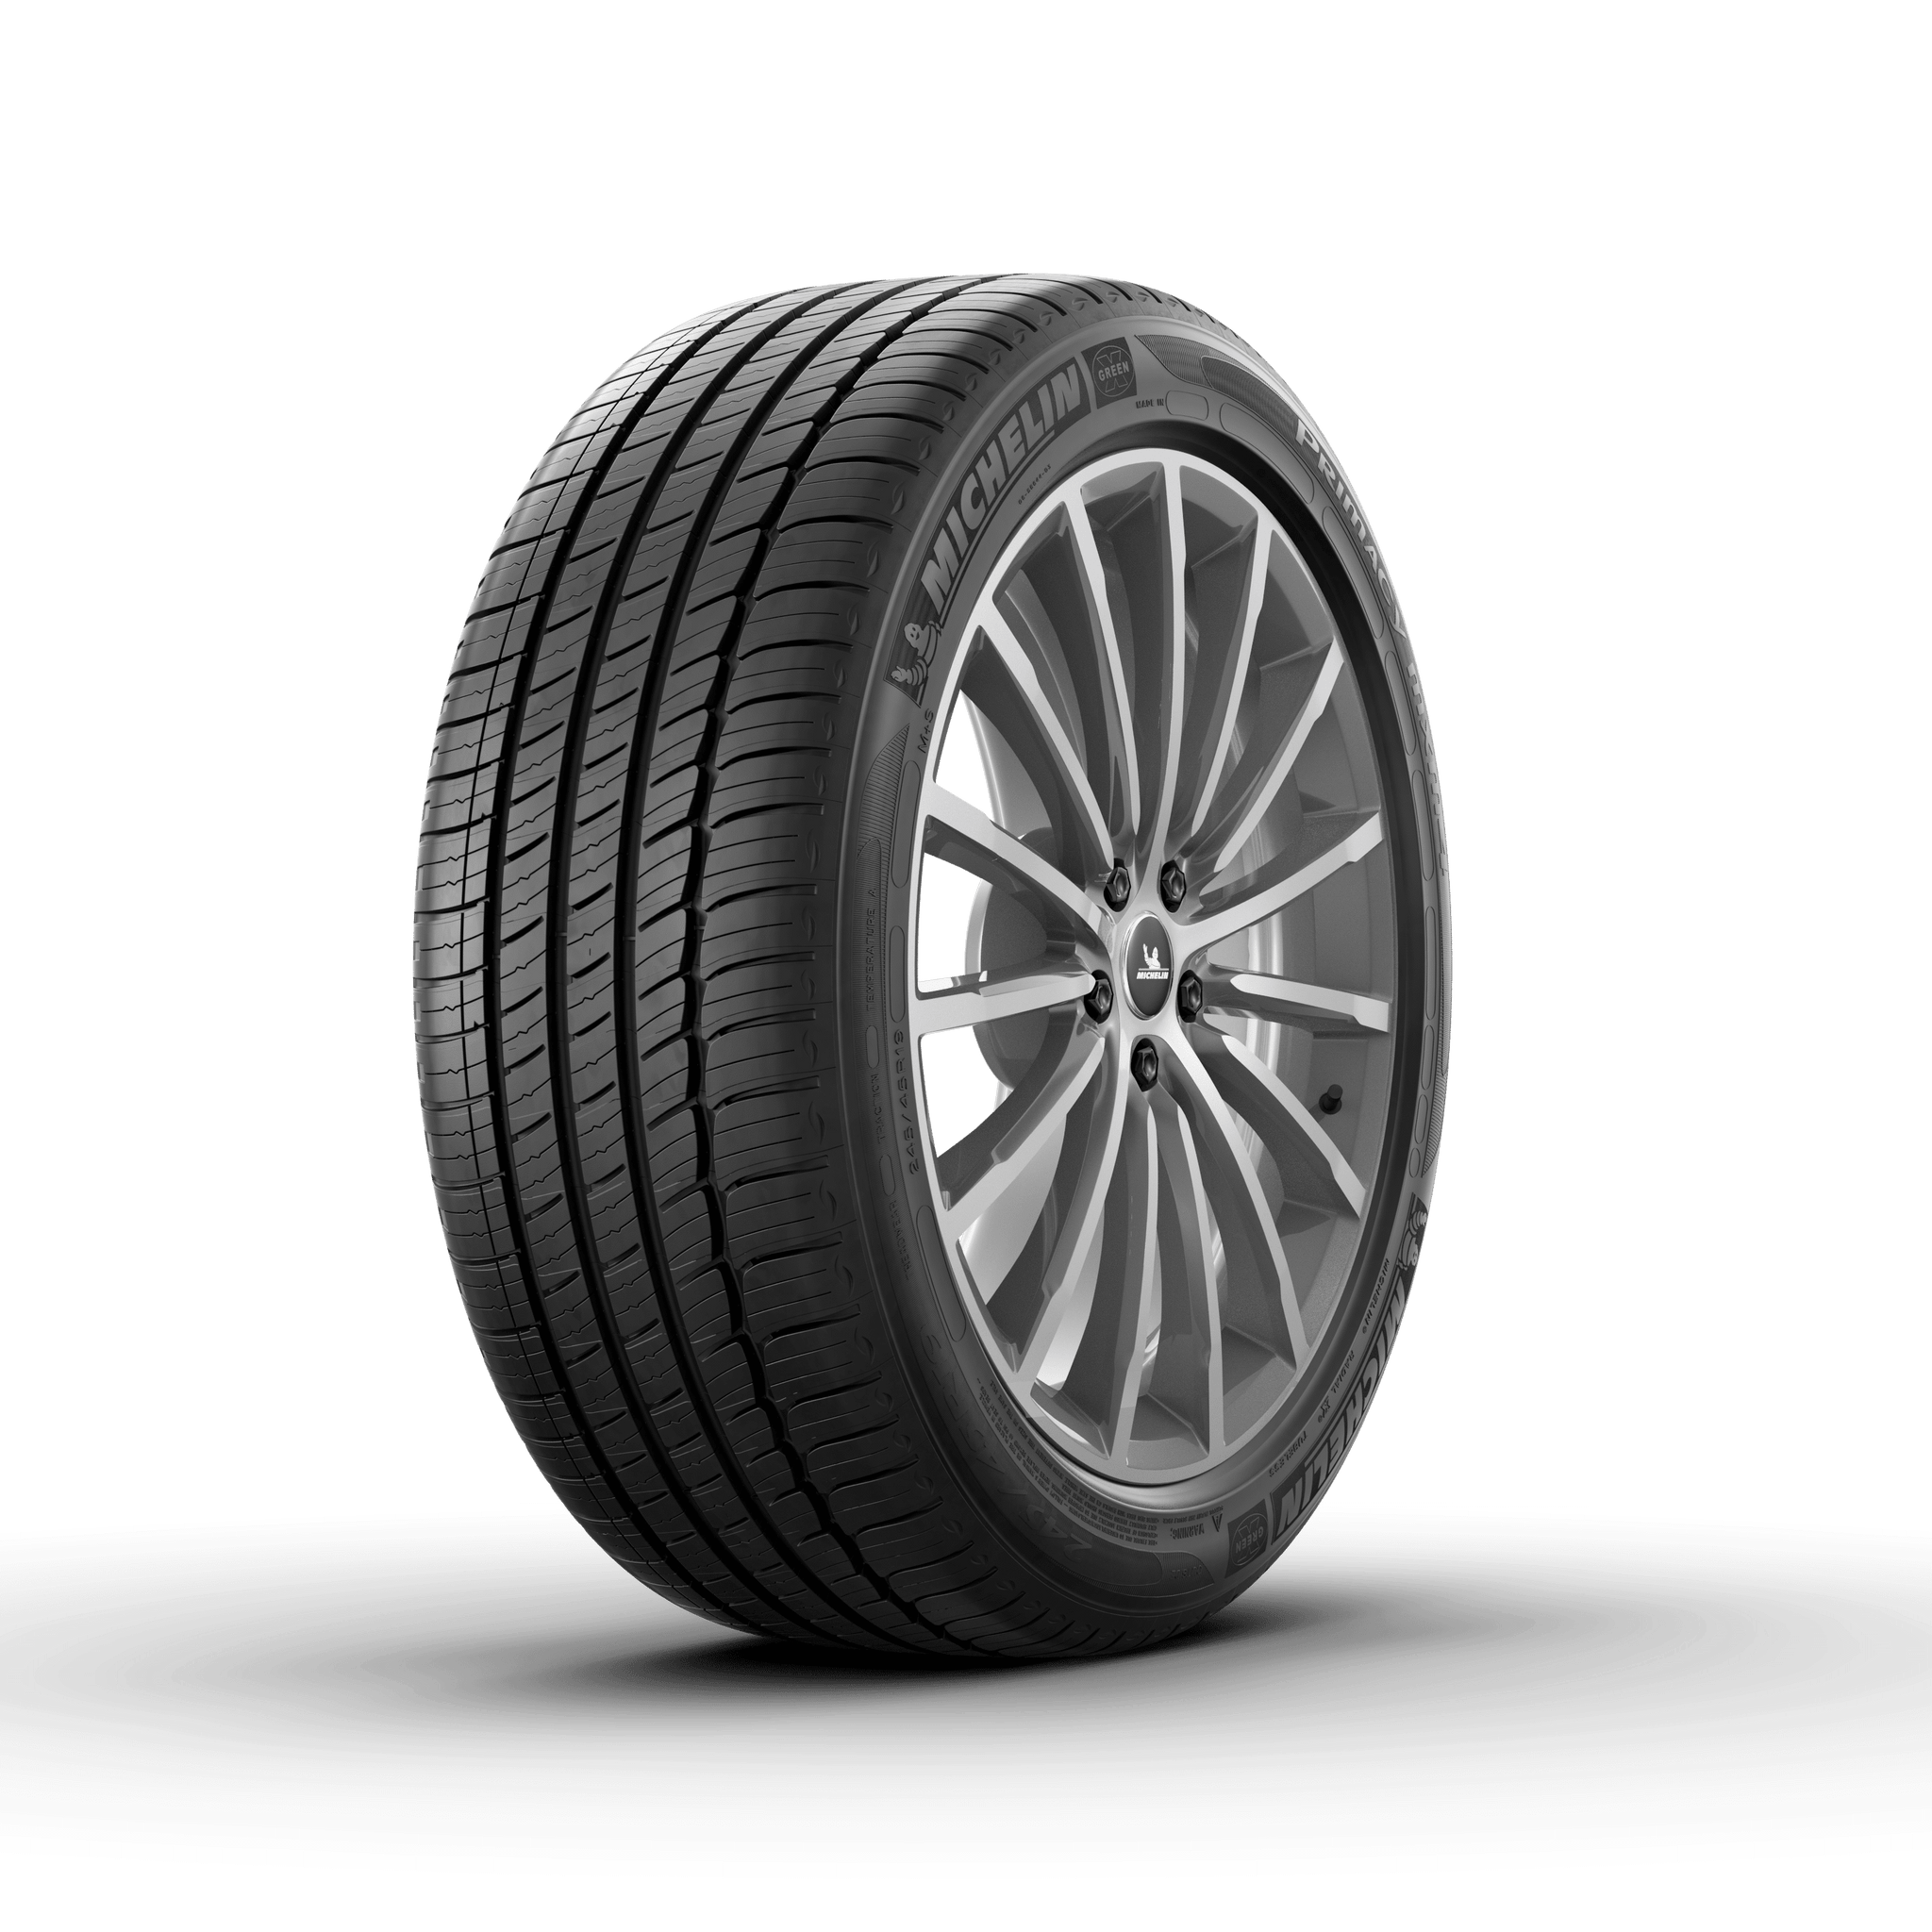 MICHELIN PRIMACY MXM4 P215/45R17 (24.7X8.5R 17) Tires